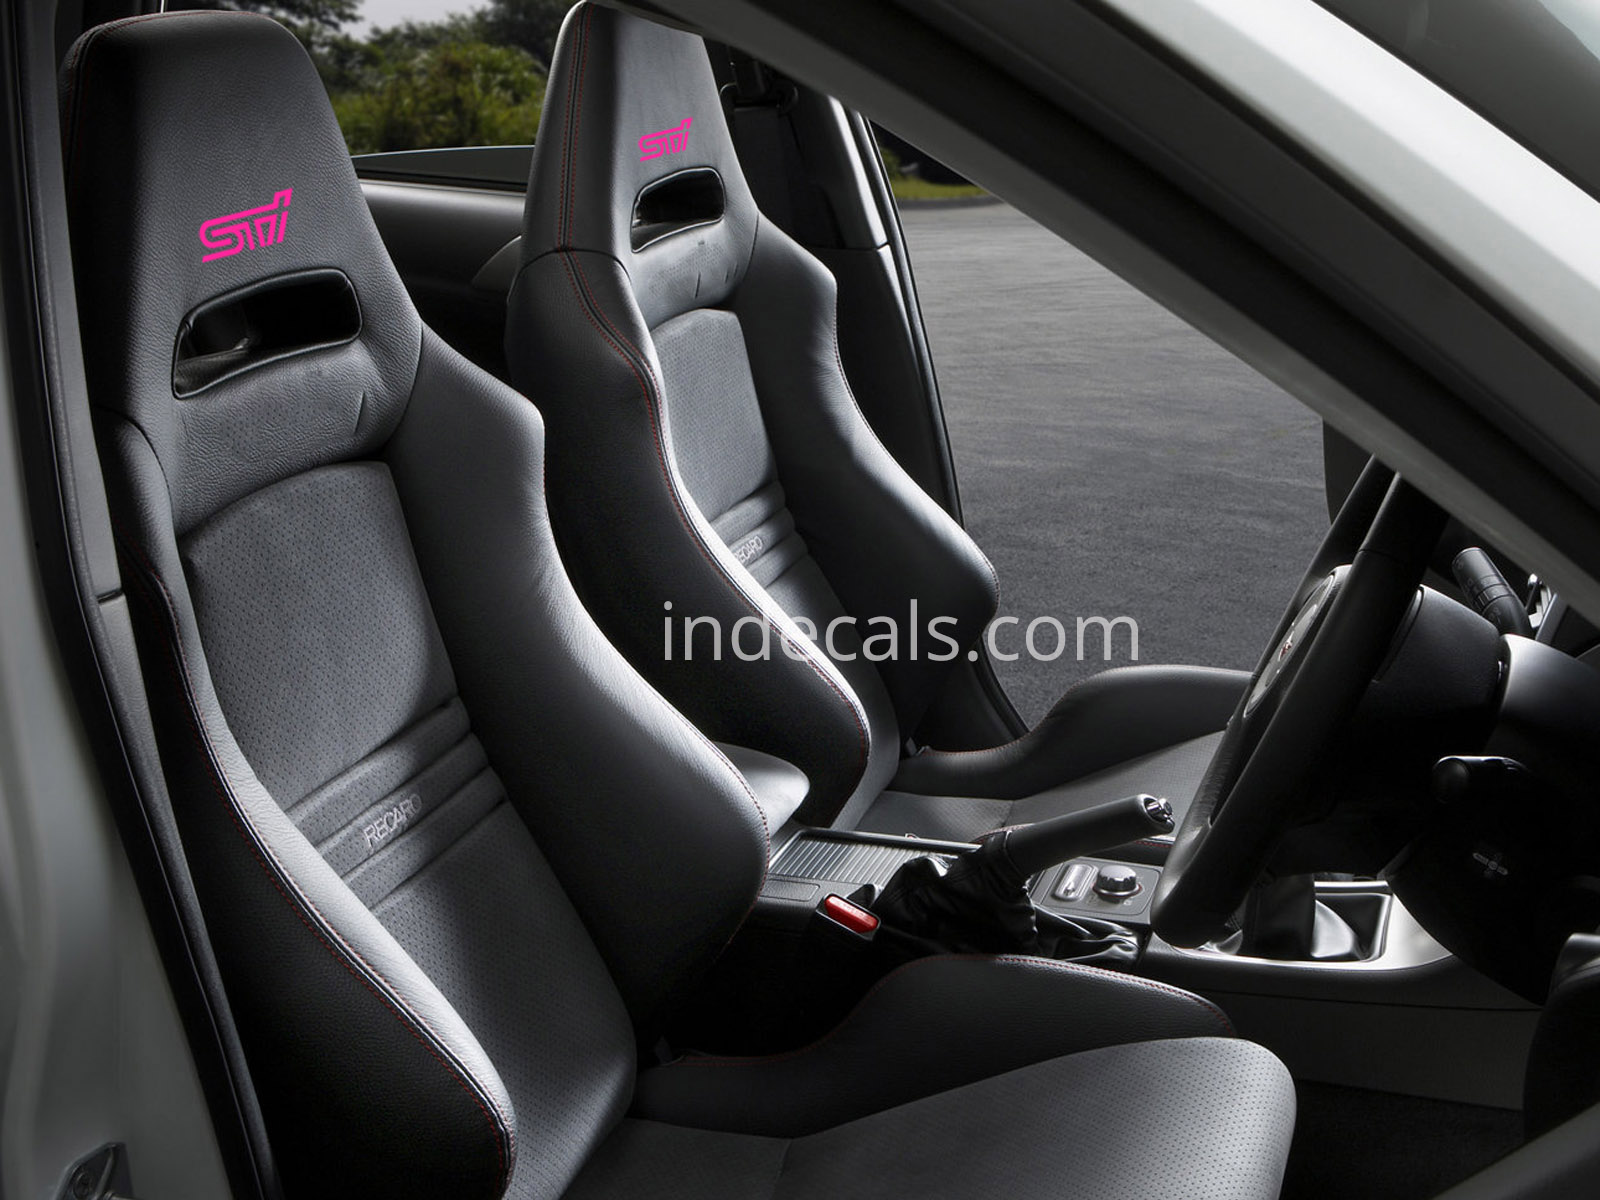 5 x Subaru STI stickers for Headrests - Pink